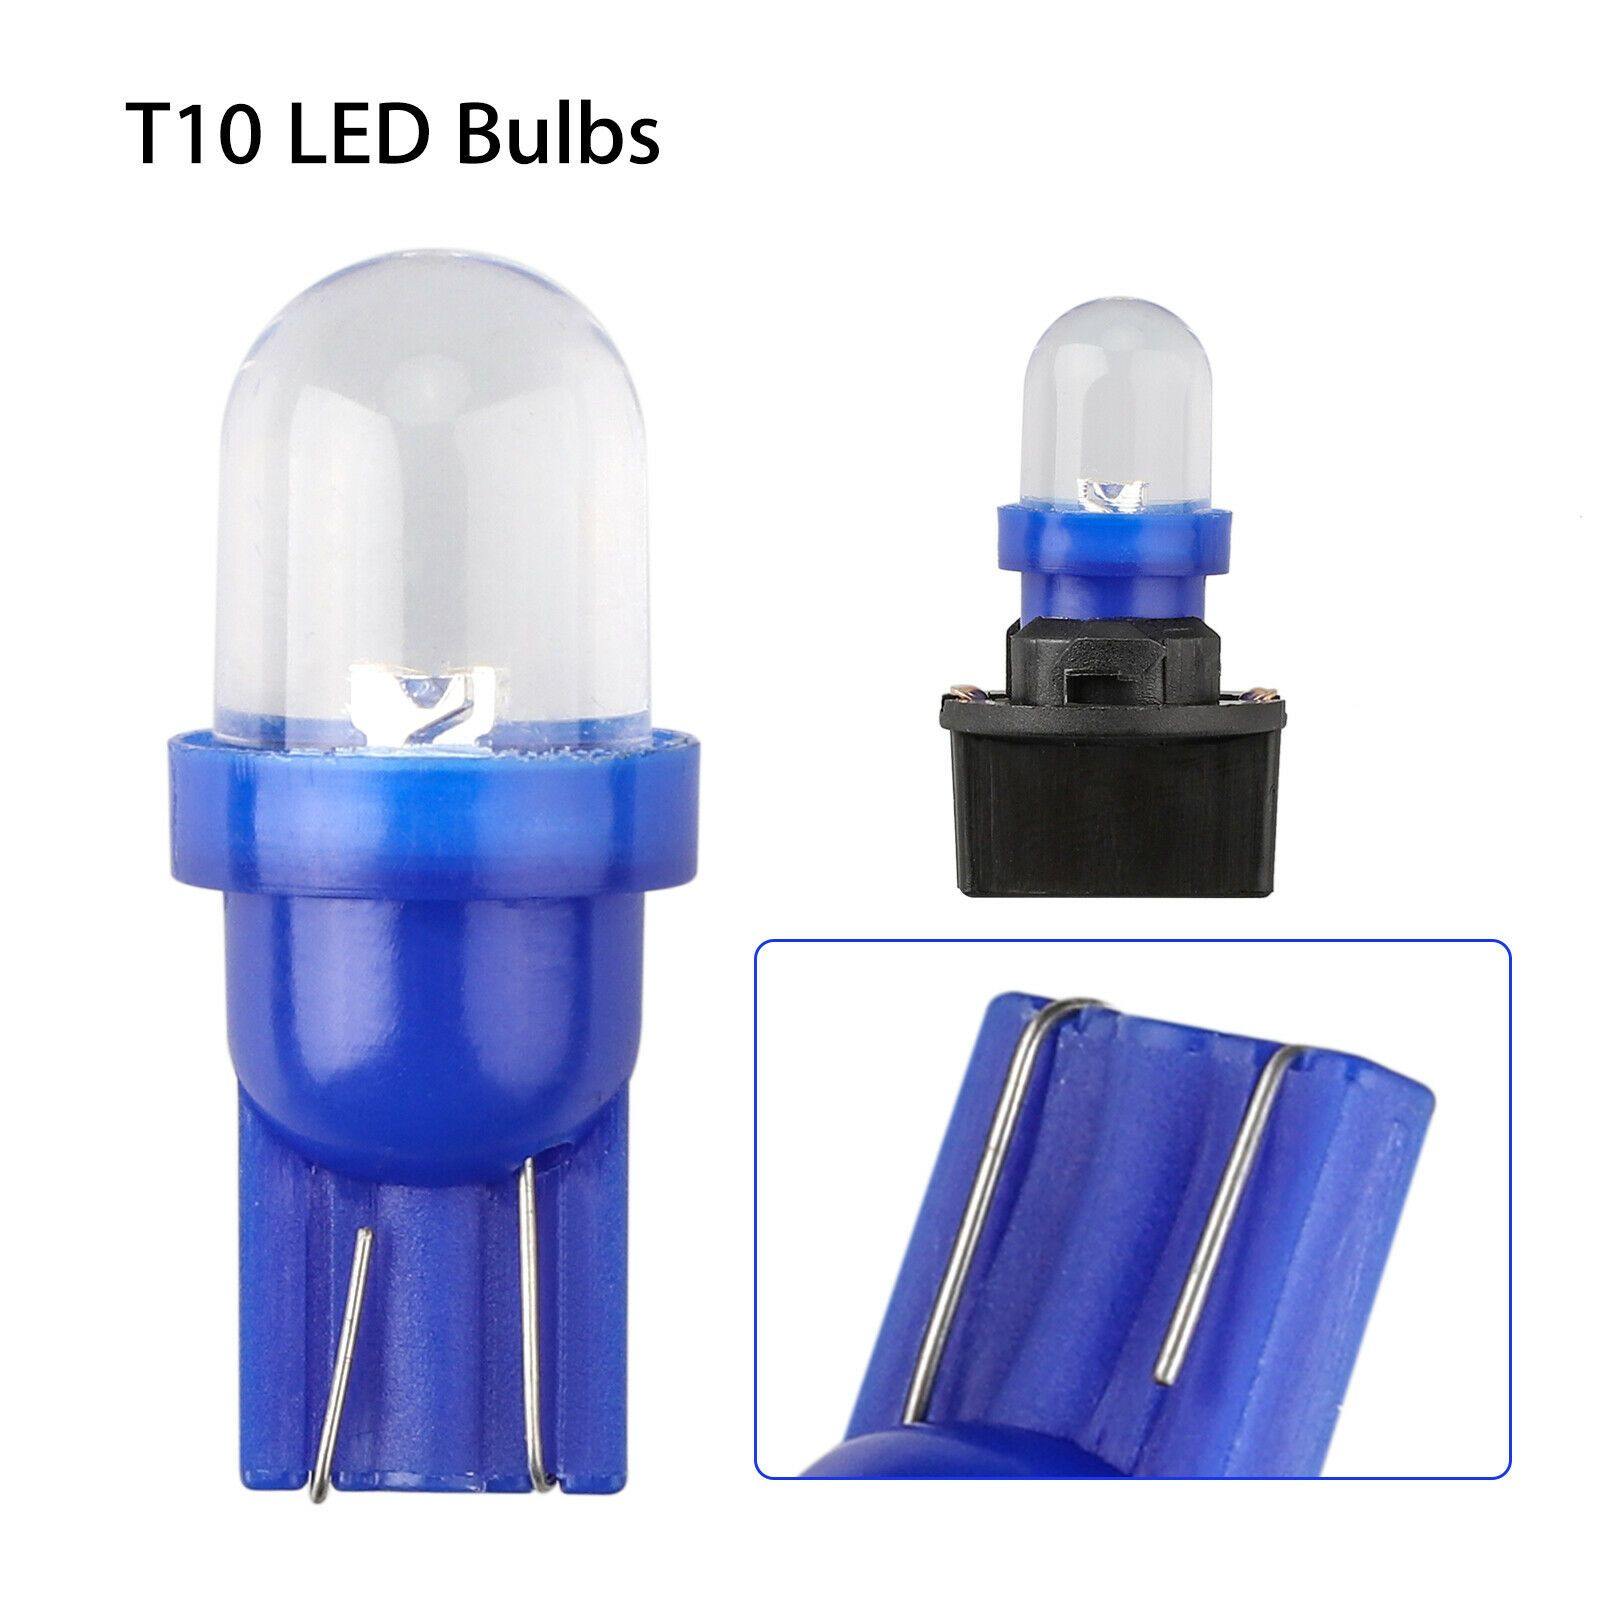 10PCS Blue T10 194 LED Bulbs for Instrument Gauge Cluster Dash Light With Sockets - KinglyDay